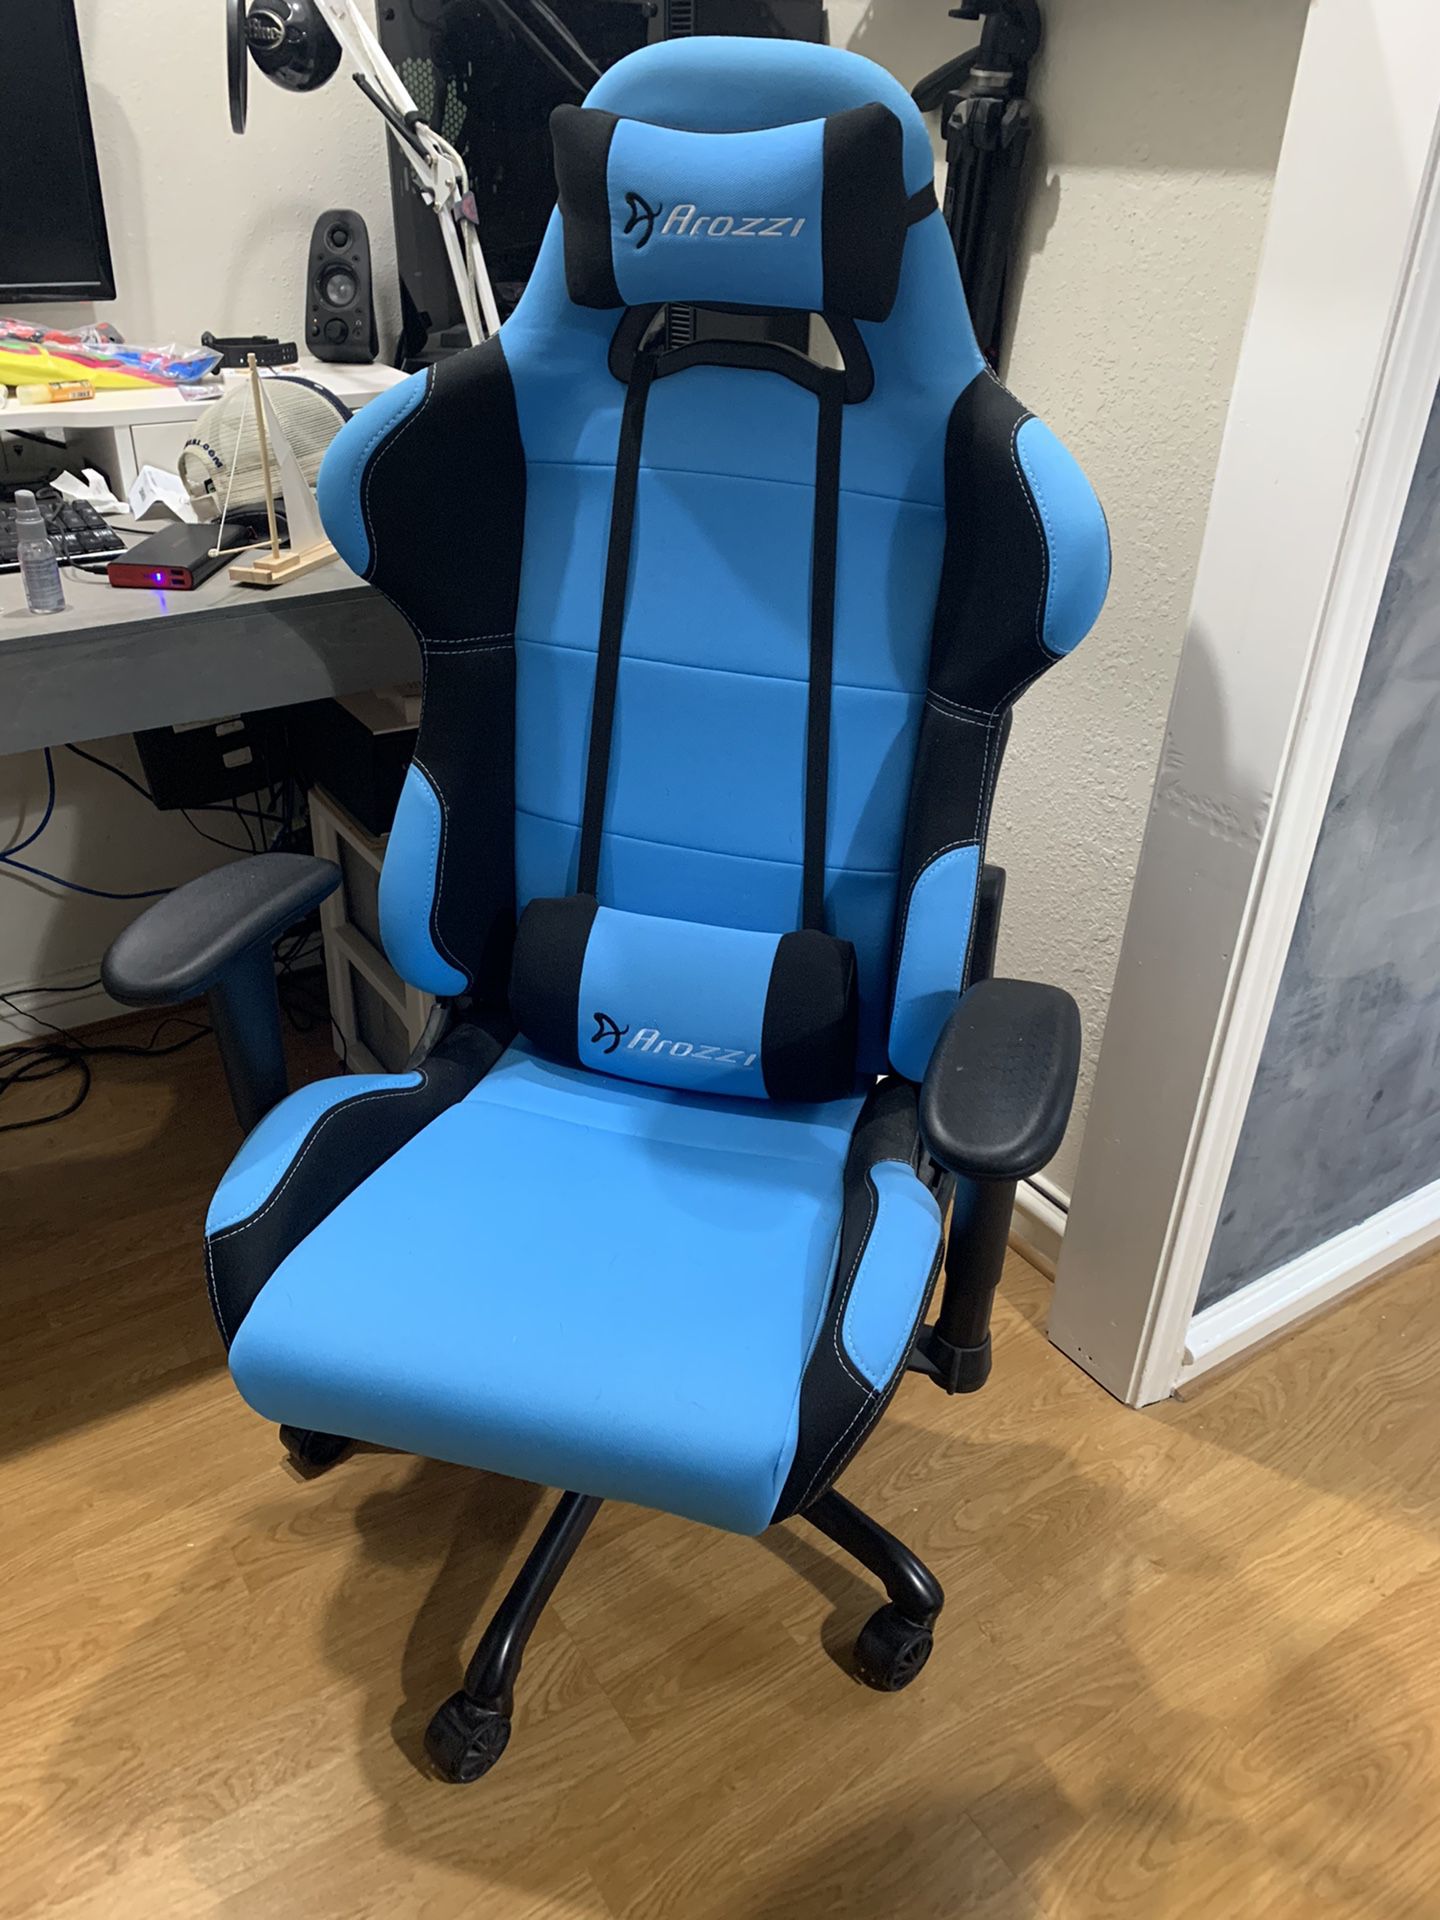 Arozzi gaming chair